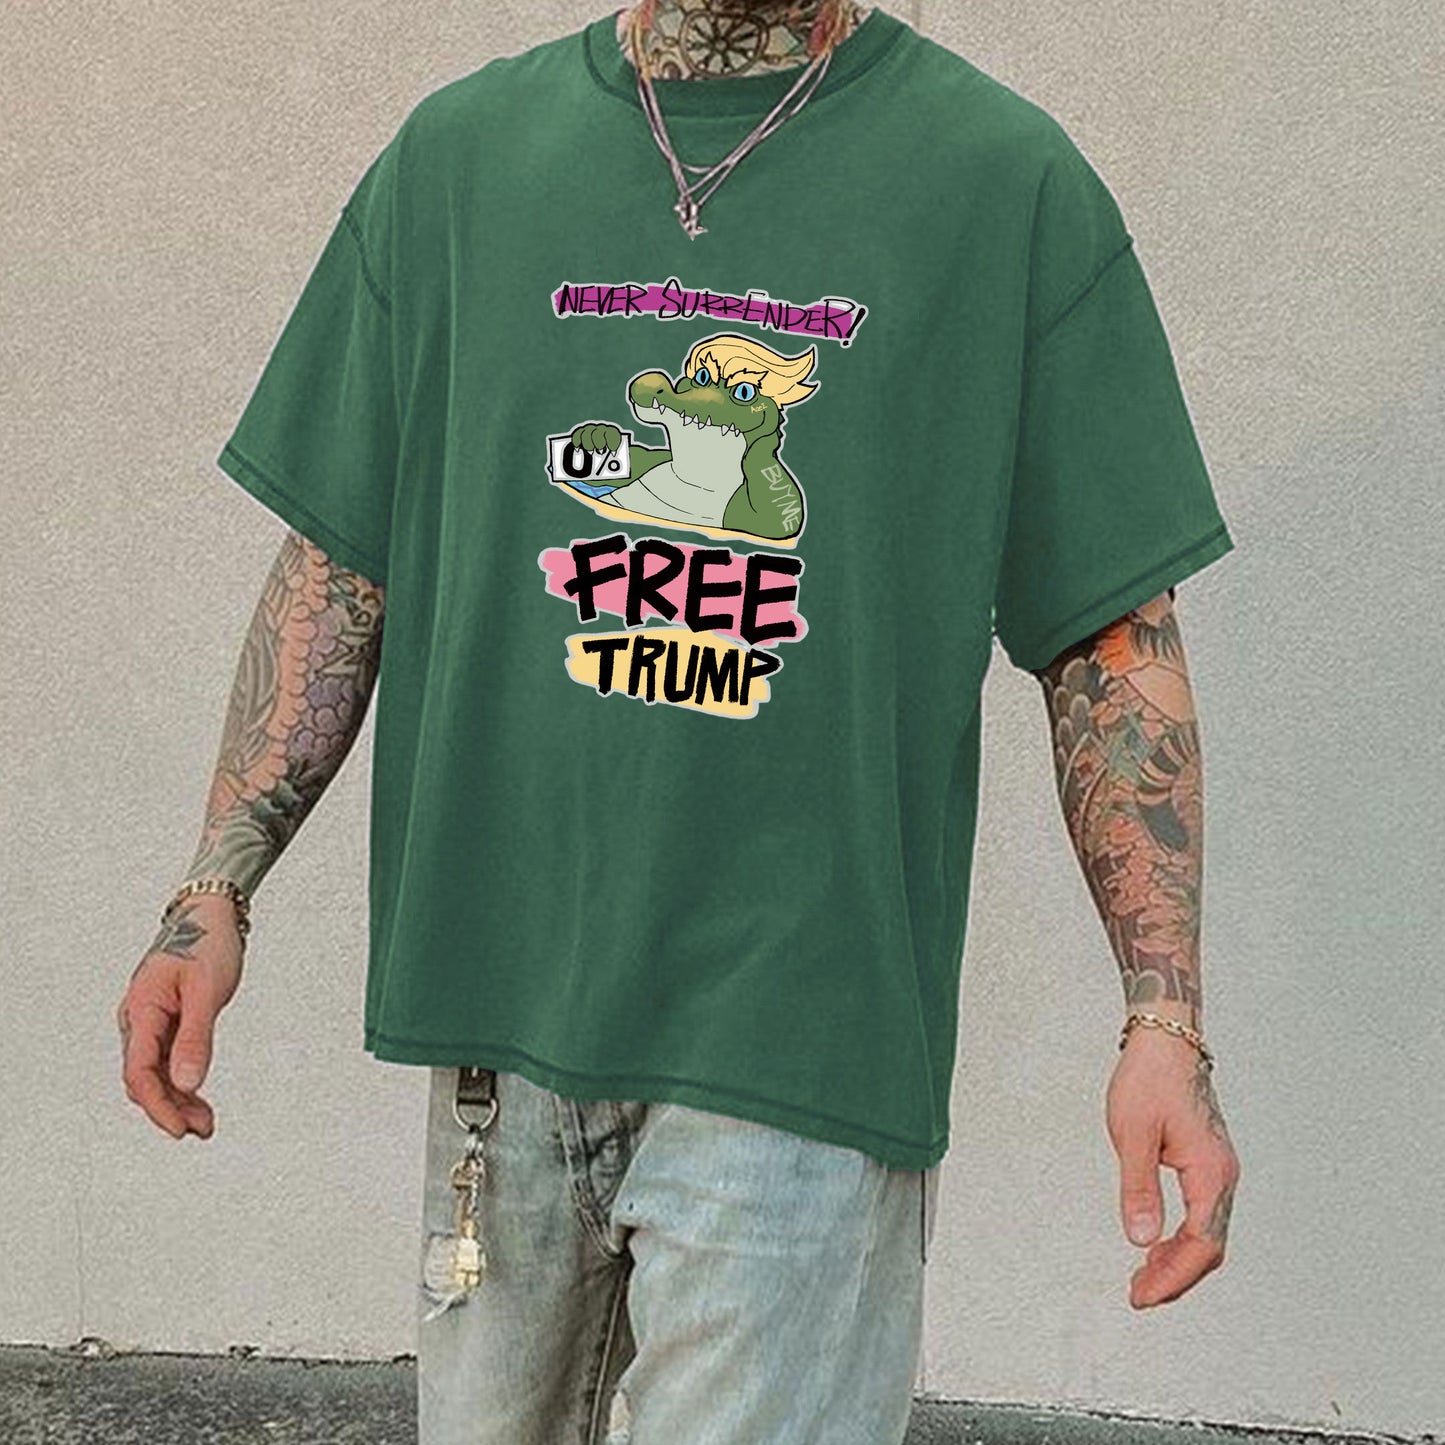 NOVAROPA™ Free Trump Men's Cotton T-shirt